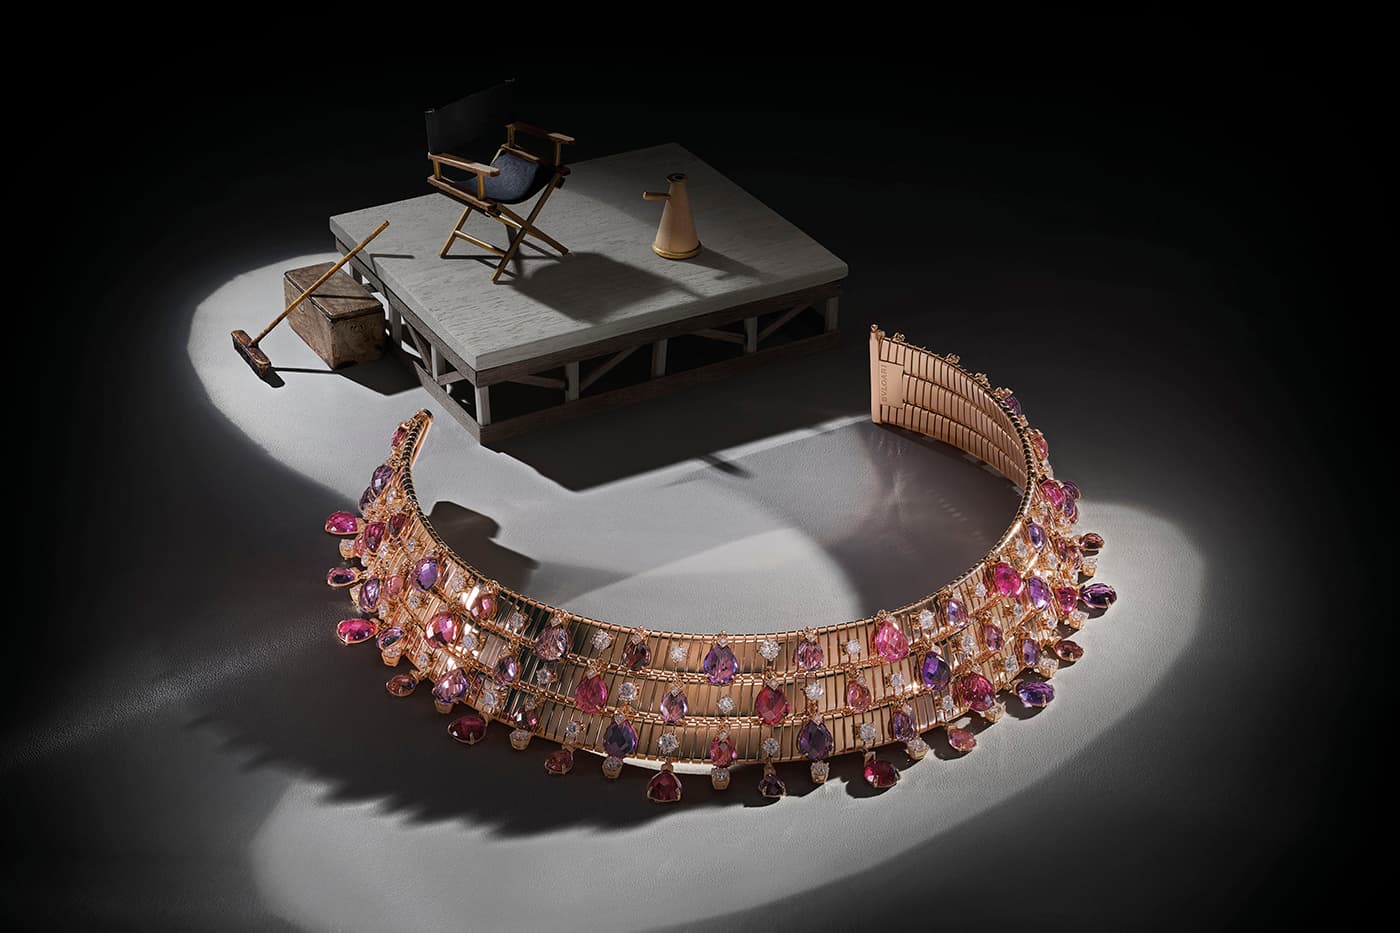 Bulgari's Cinemagia high jewellery enters a new dimension